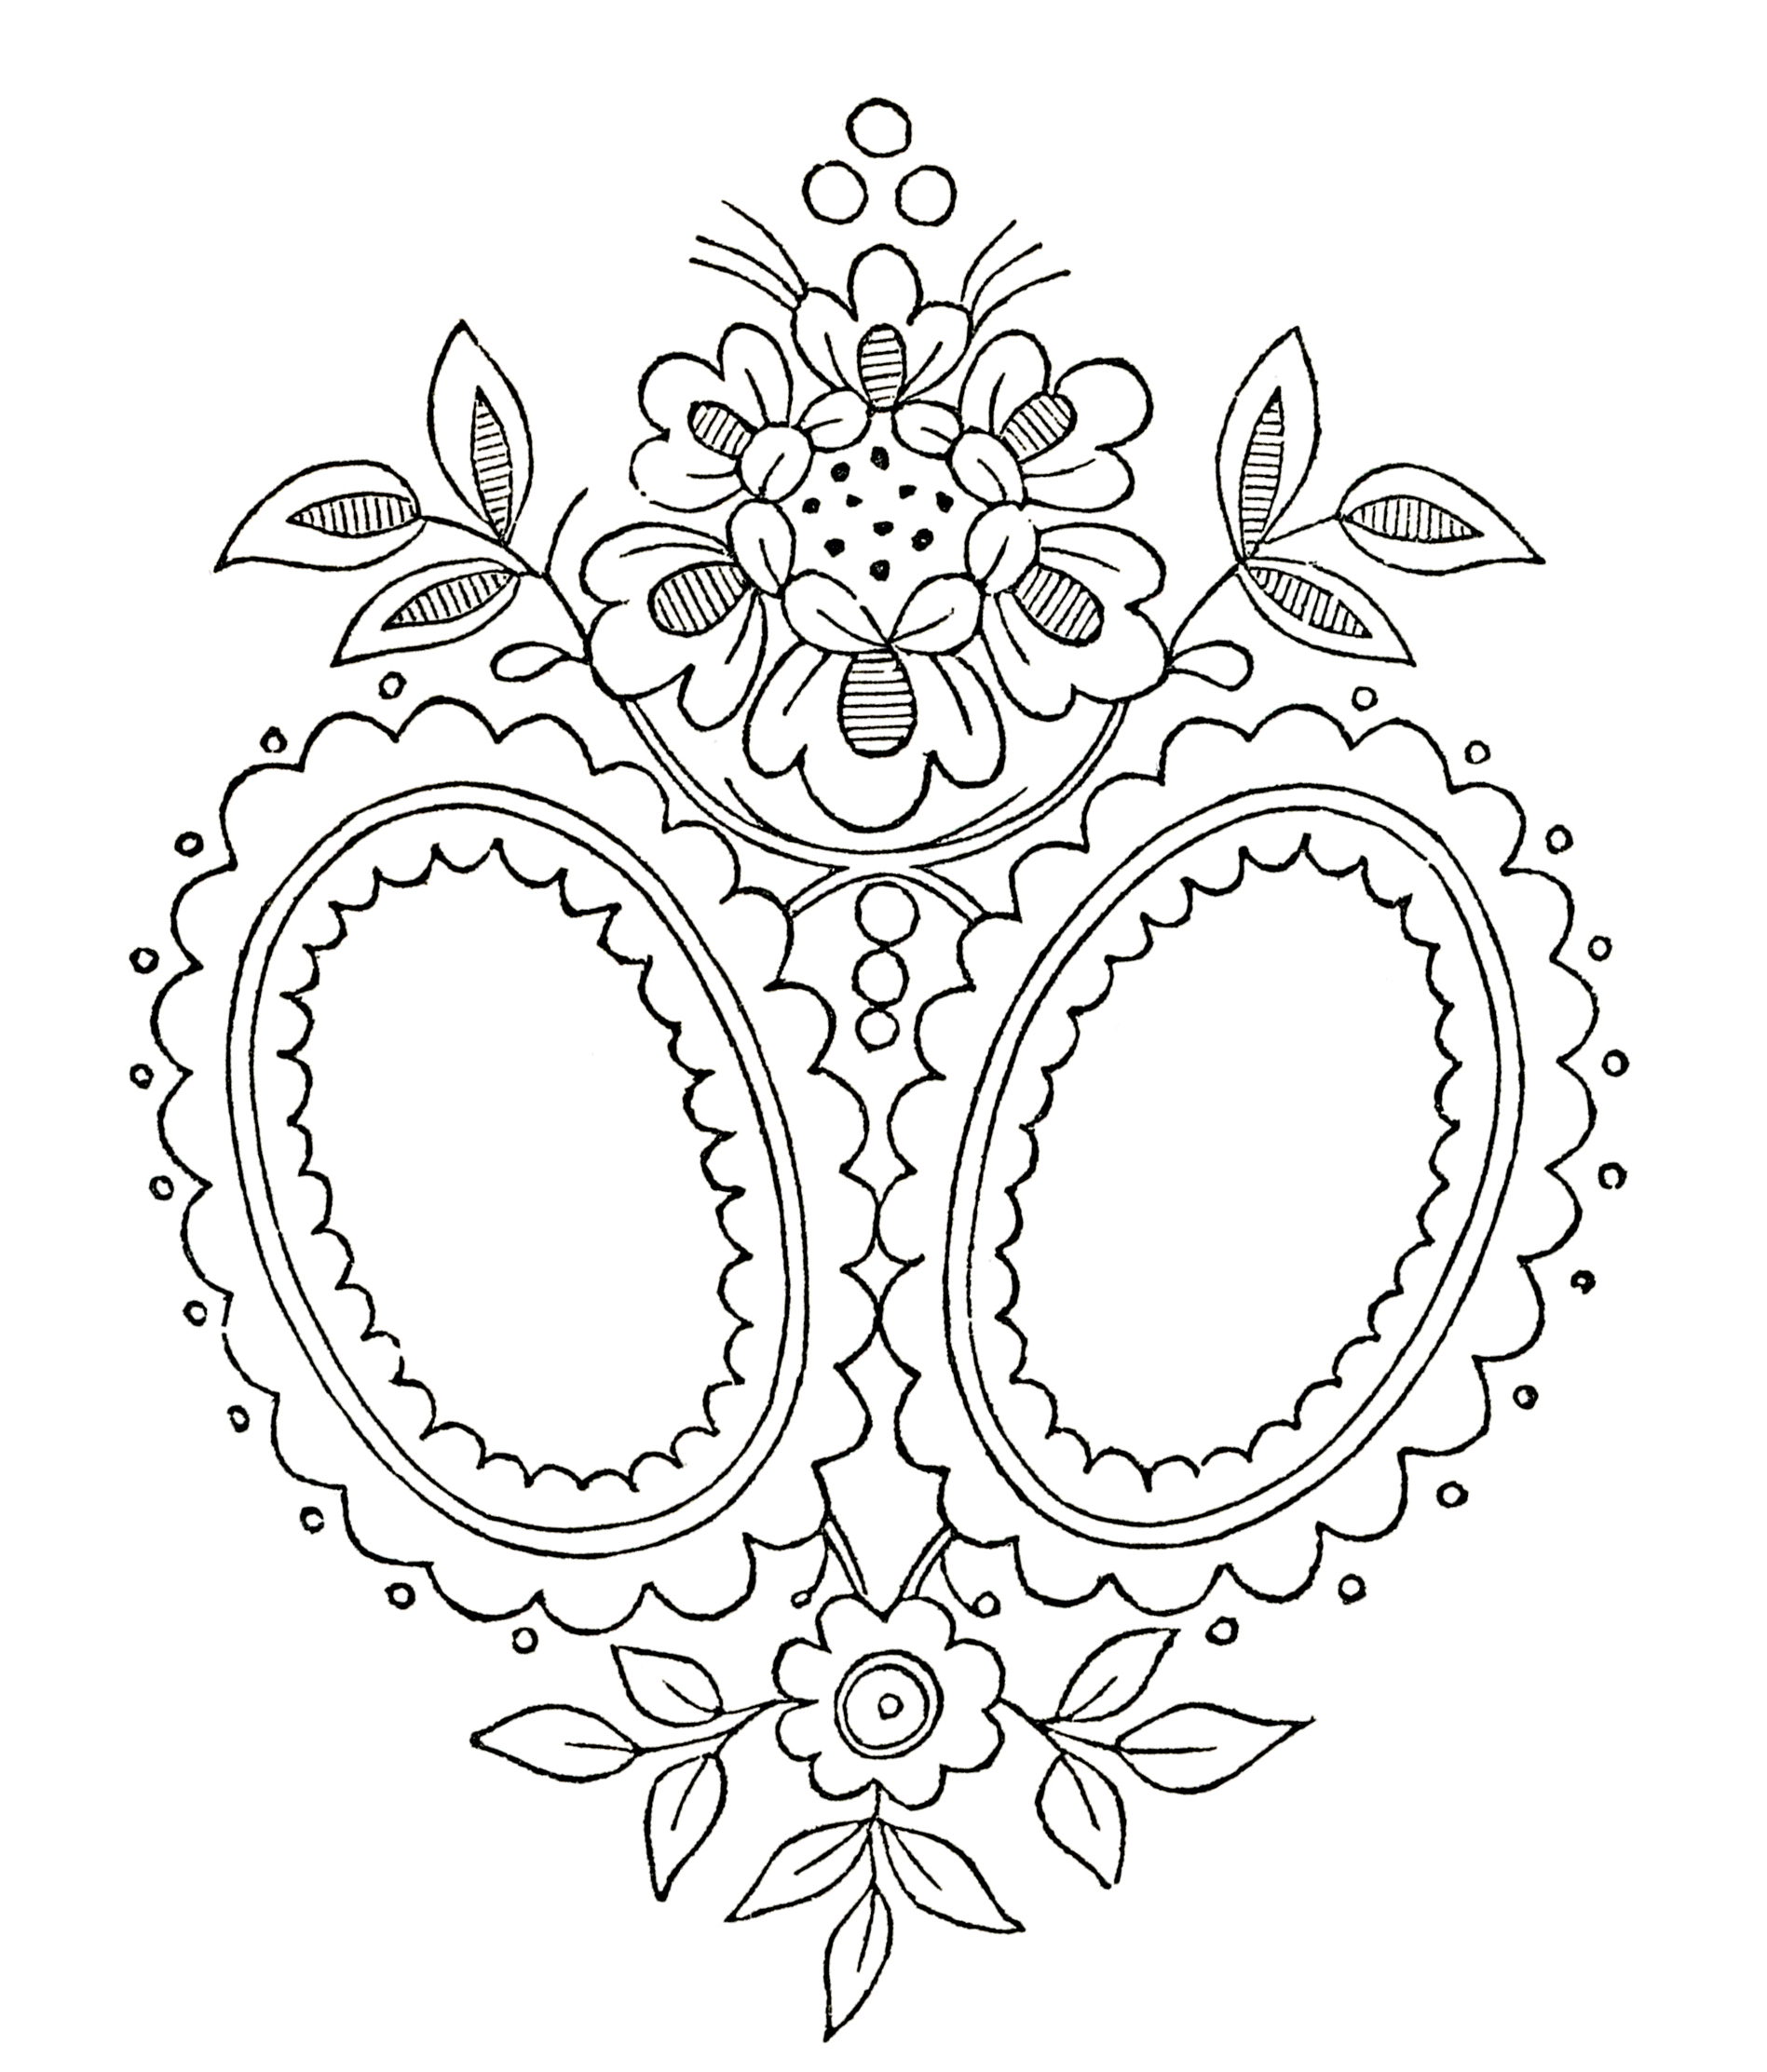 Free Embroidery Design: Lace Reinterpreted – NeedlenThread.com